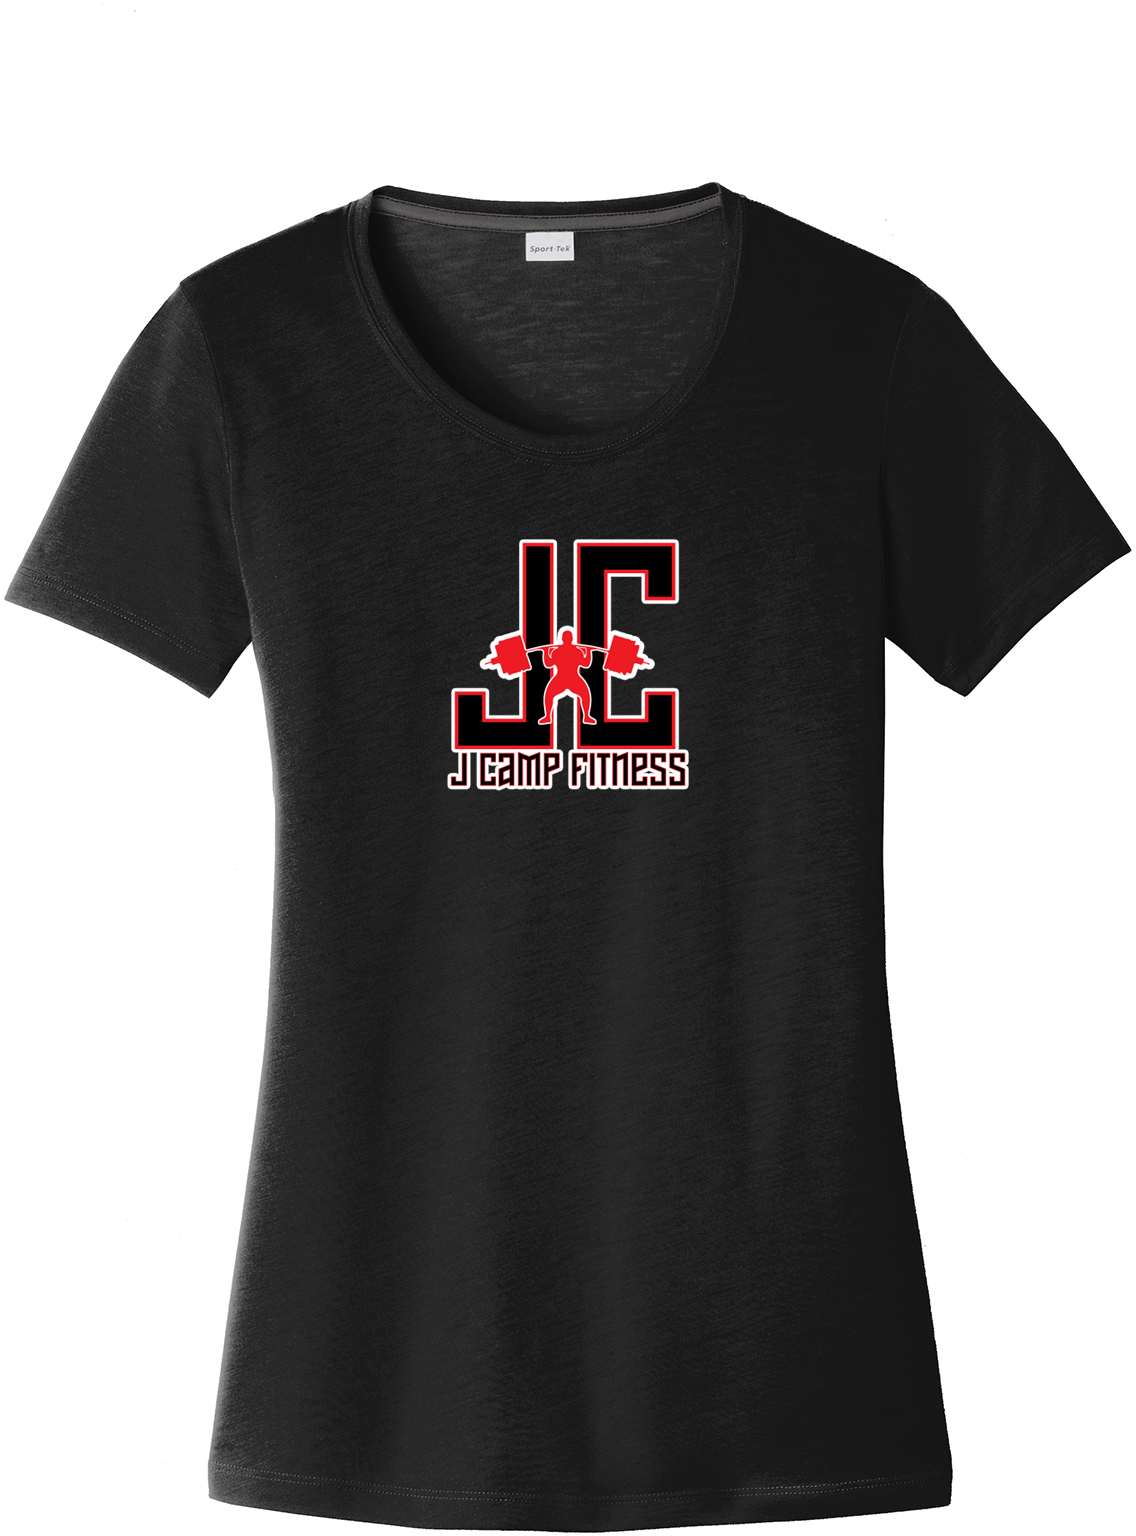 J Camp Fitness Women's CottonTouch Performance T-Shirt